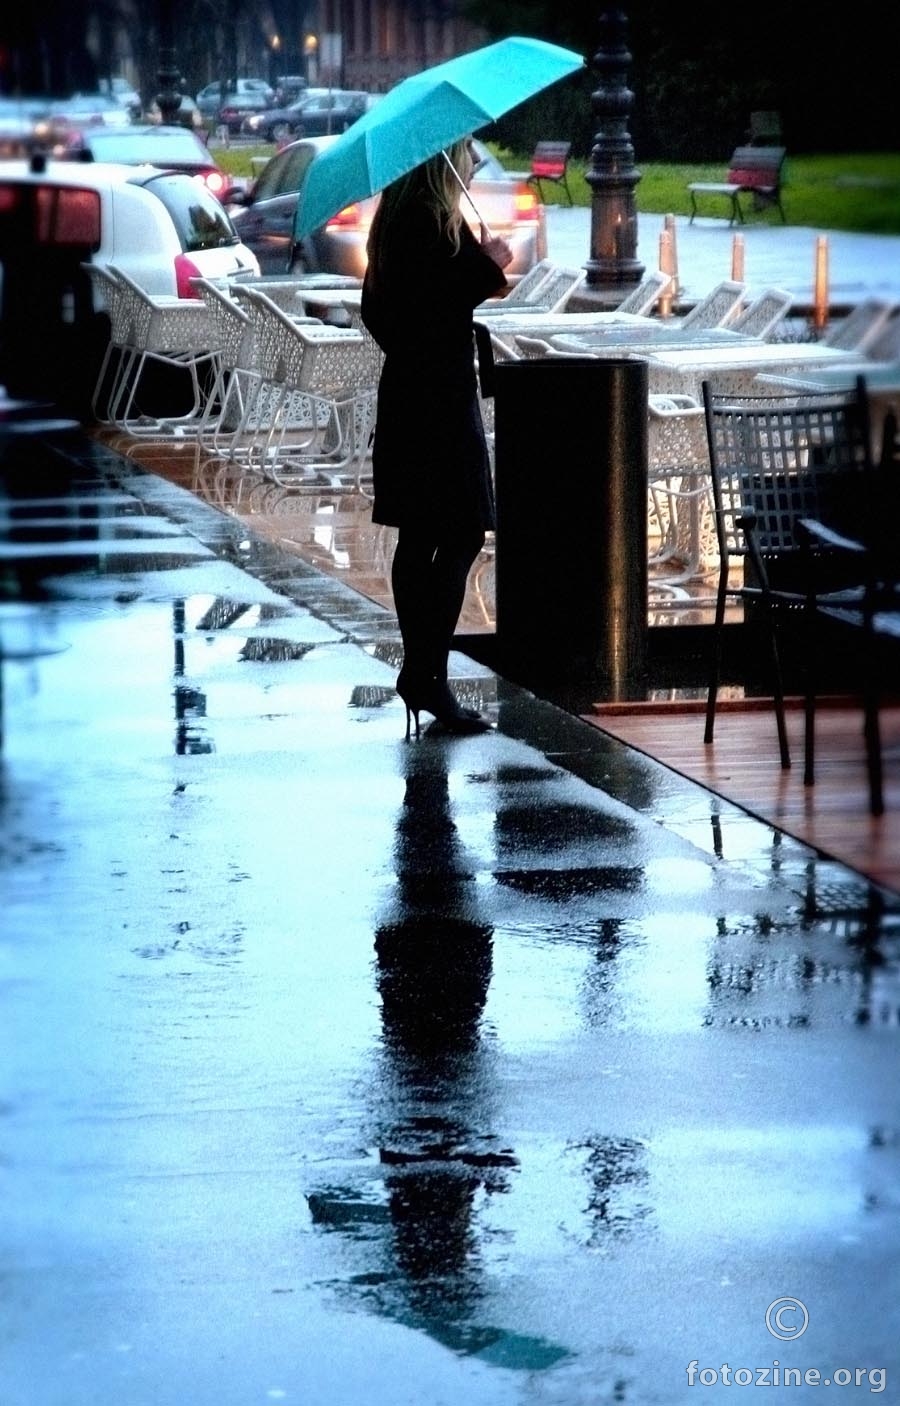 Rainlady